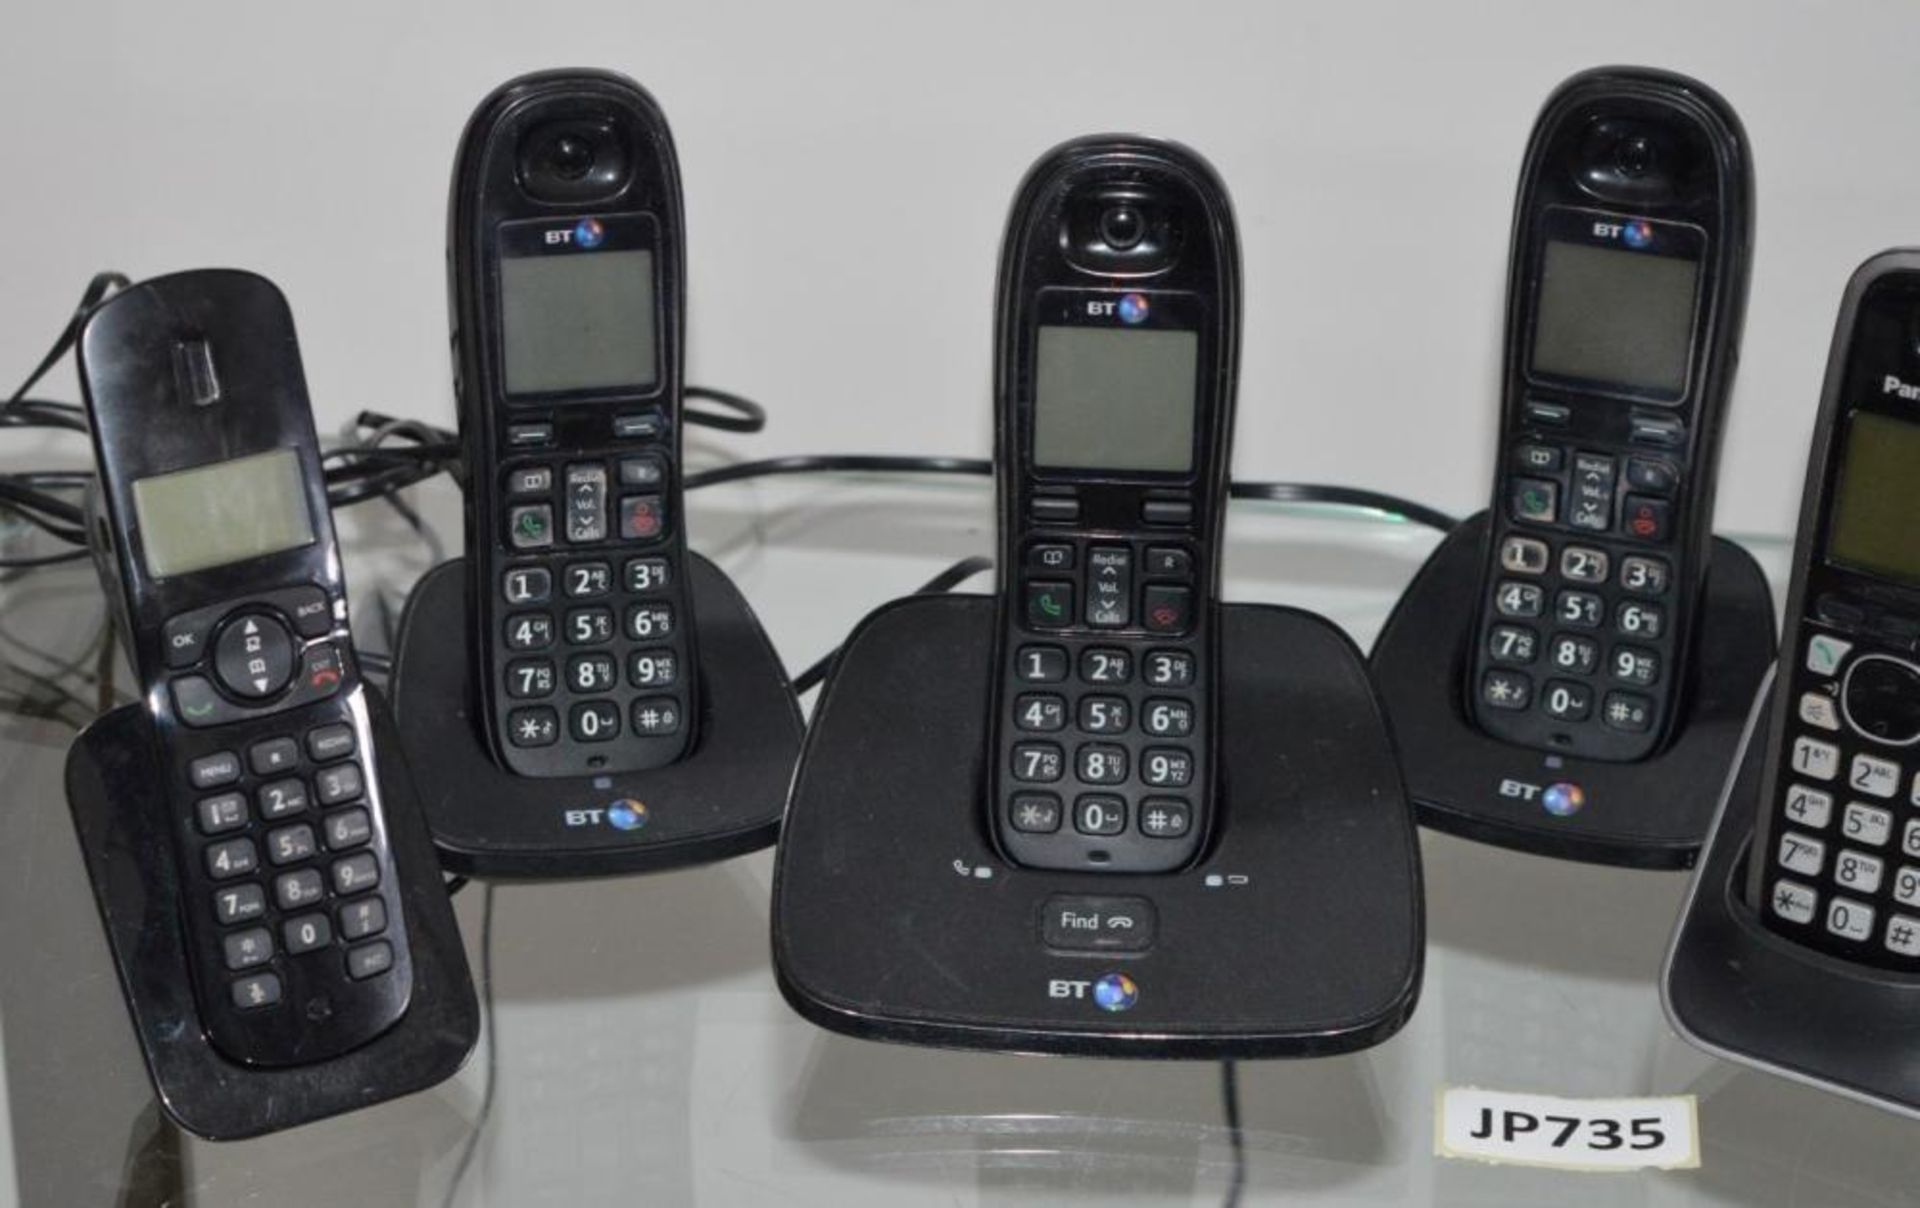 6 x Cordless Phone Handsets - Includes BT, Binatone and Panasonic Models - CL285 - Ref JP735 - Locat - Image 3 of 4